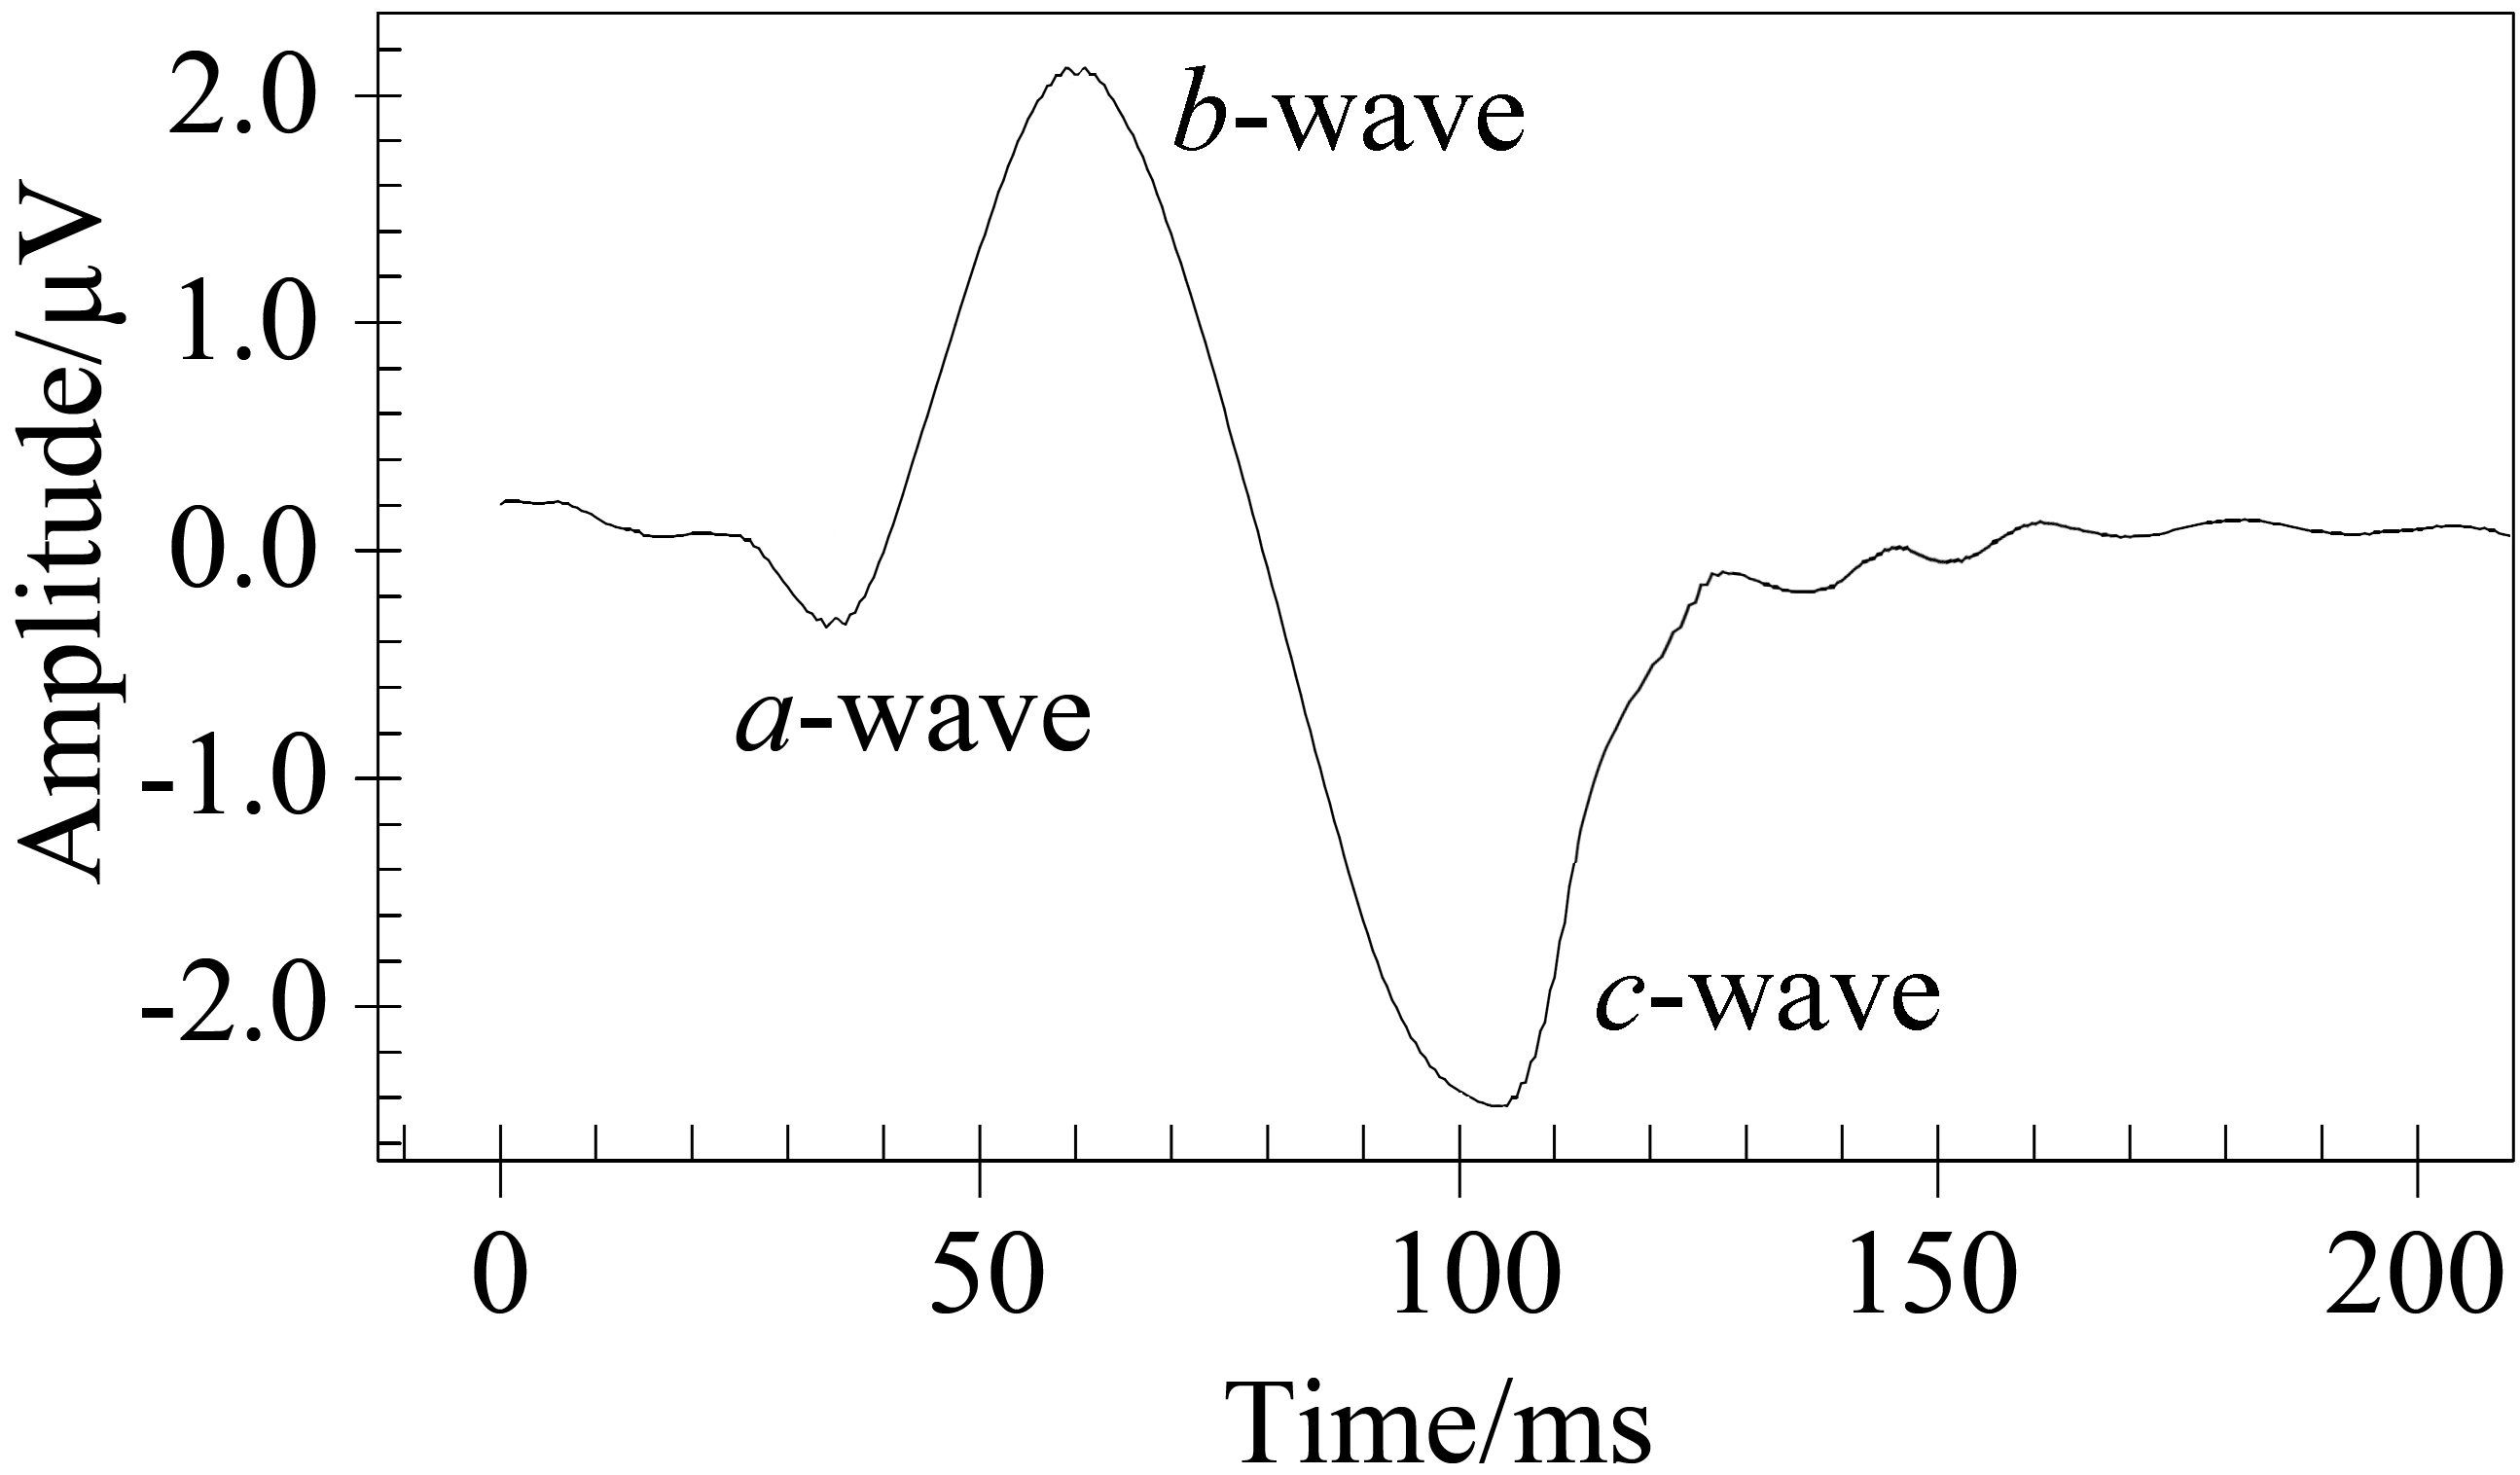 Waveform of the pattern ERG simulating signal.